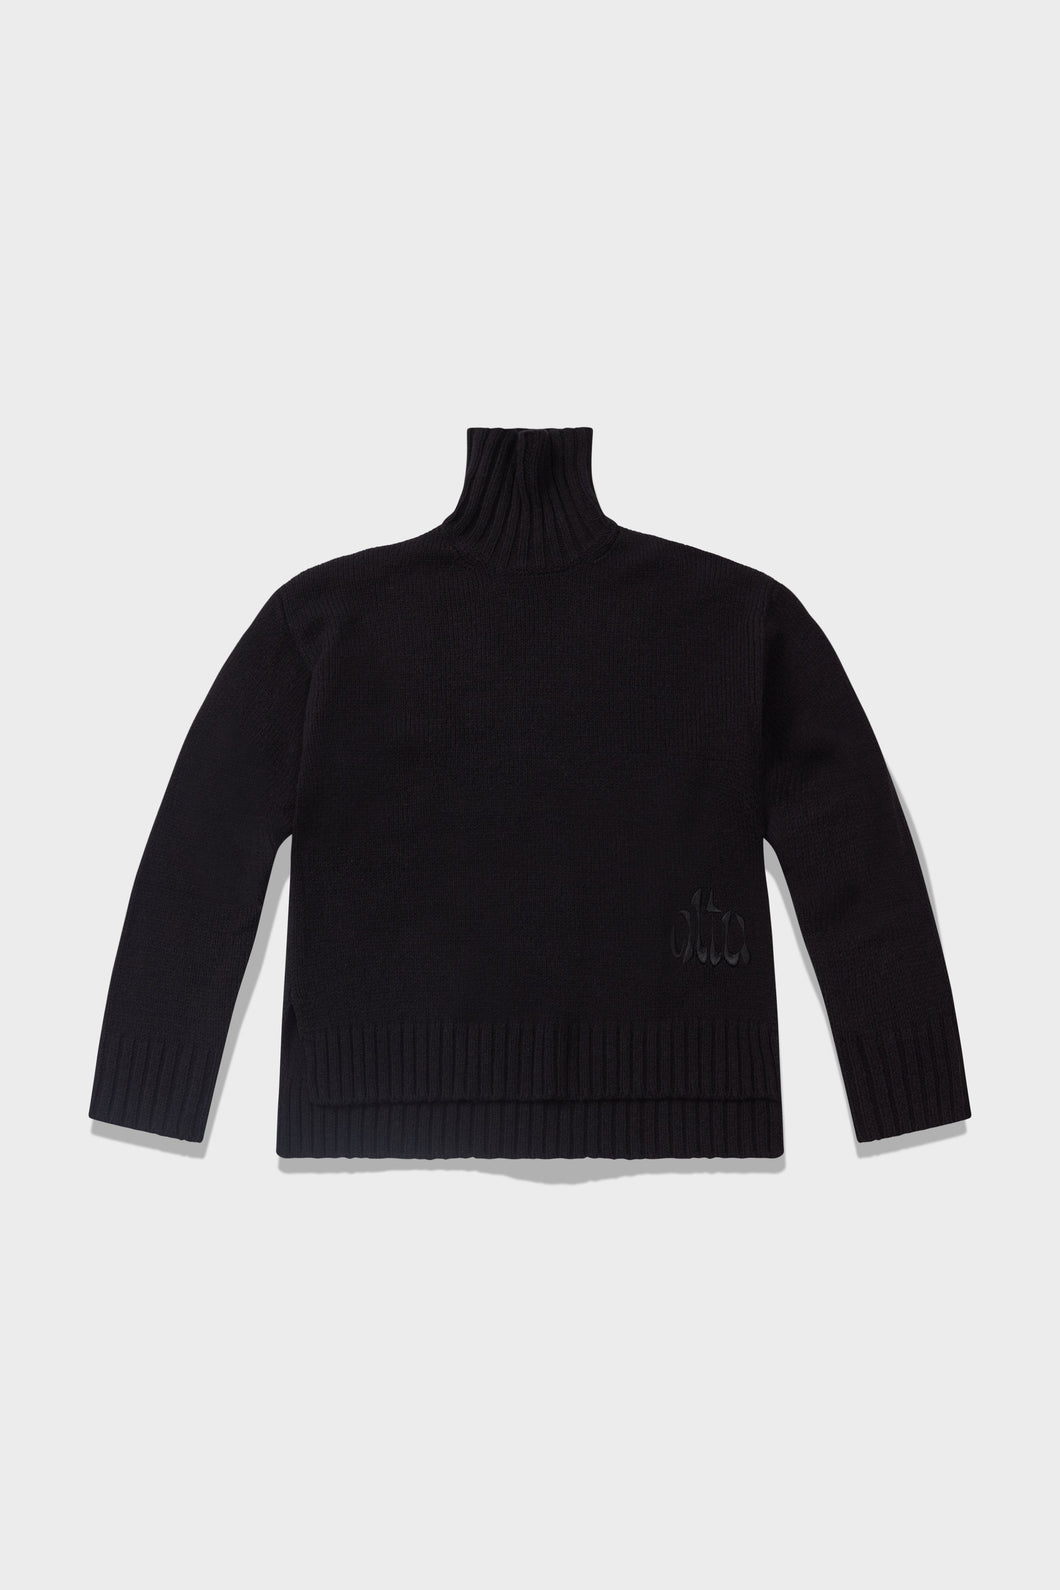 Altuzarra_Embroidered Logo Sweater-Black